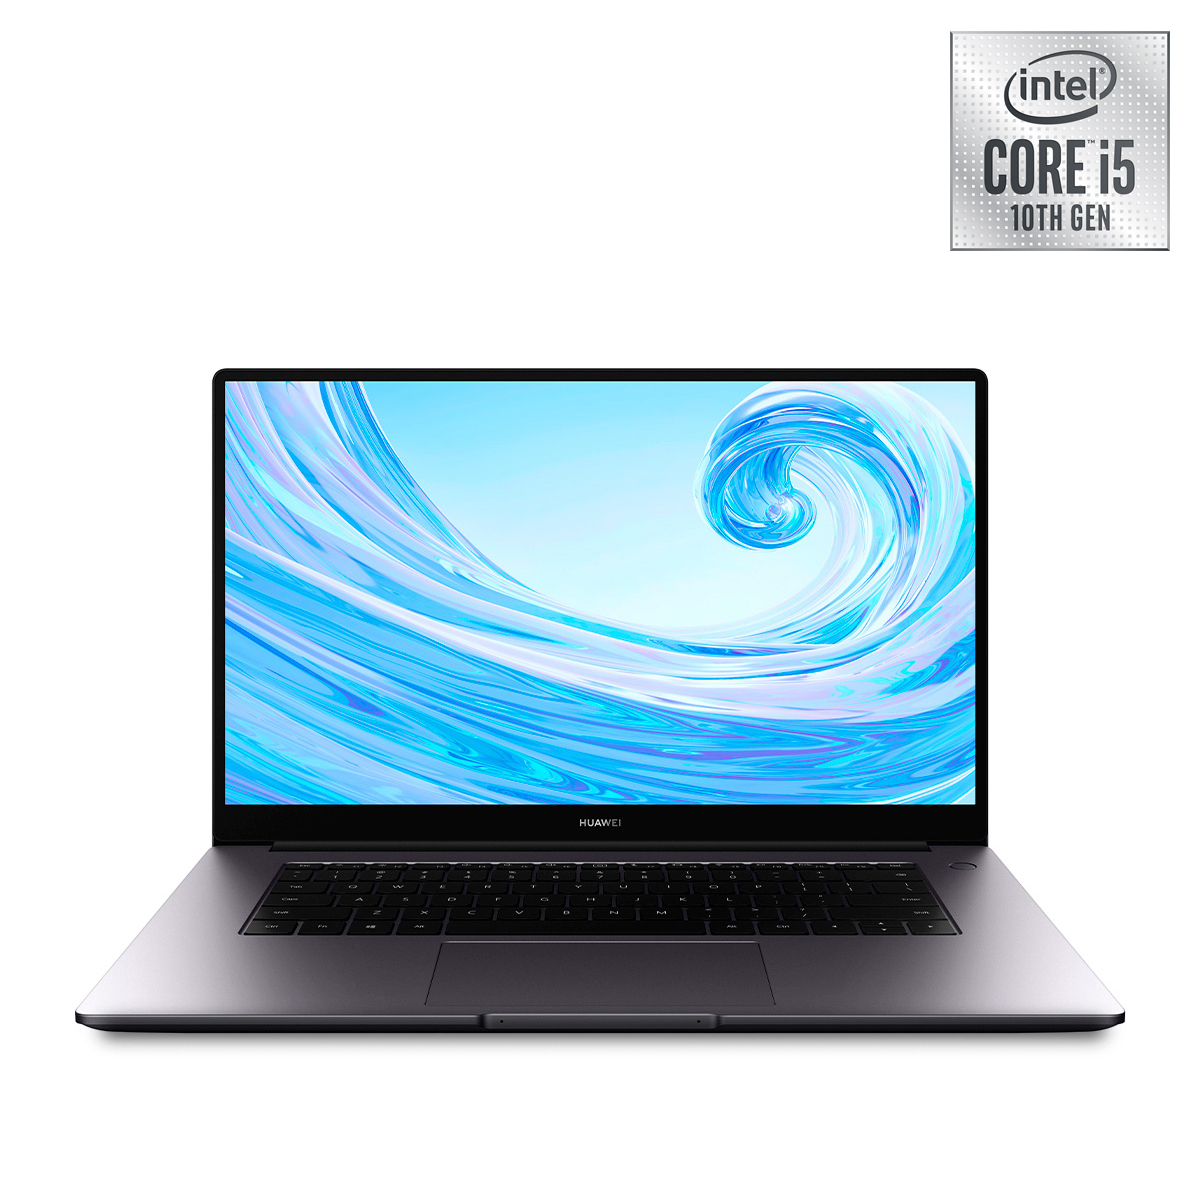 Laptop Huawei MateBook D15 Intel Core i5  Pulg. 512gb SSD 8gb RAM Gris  | Office Depot Mexico